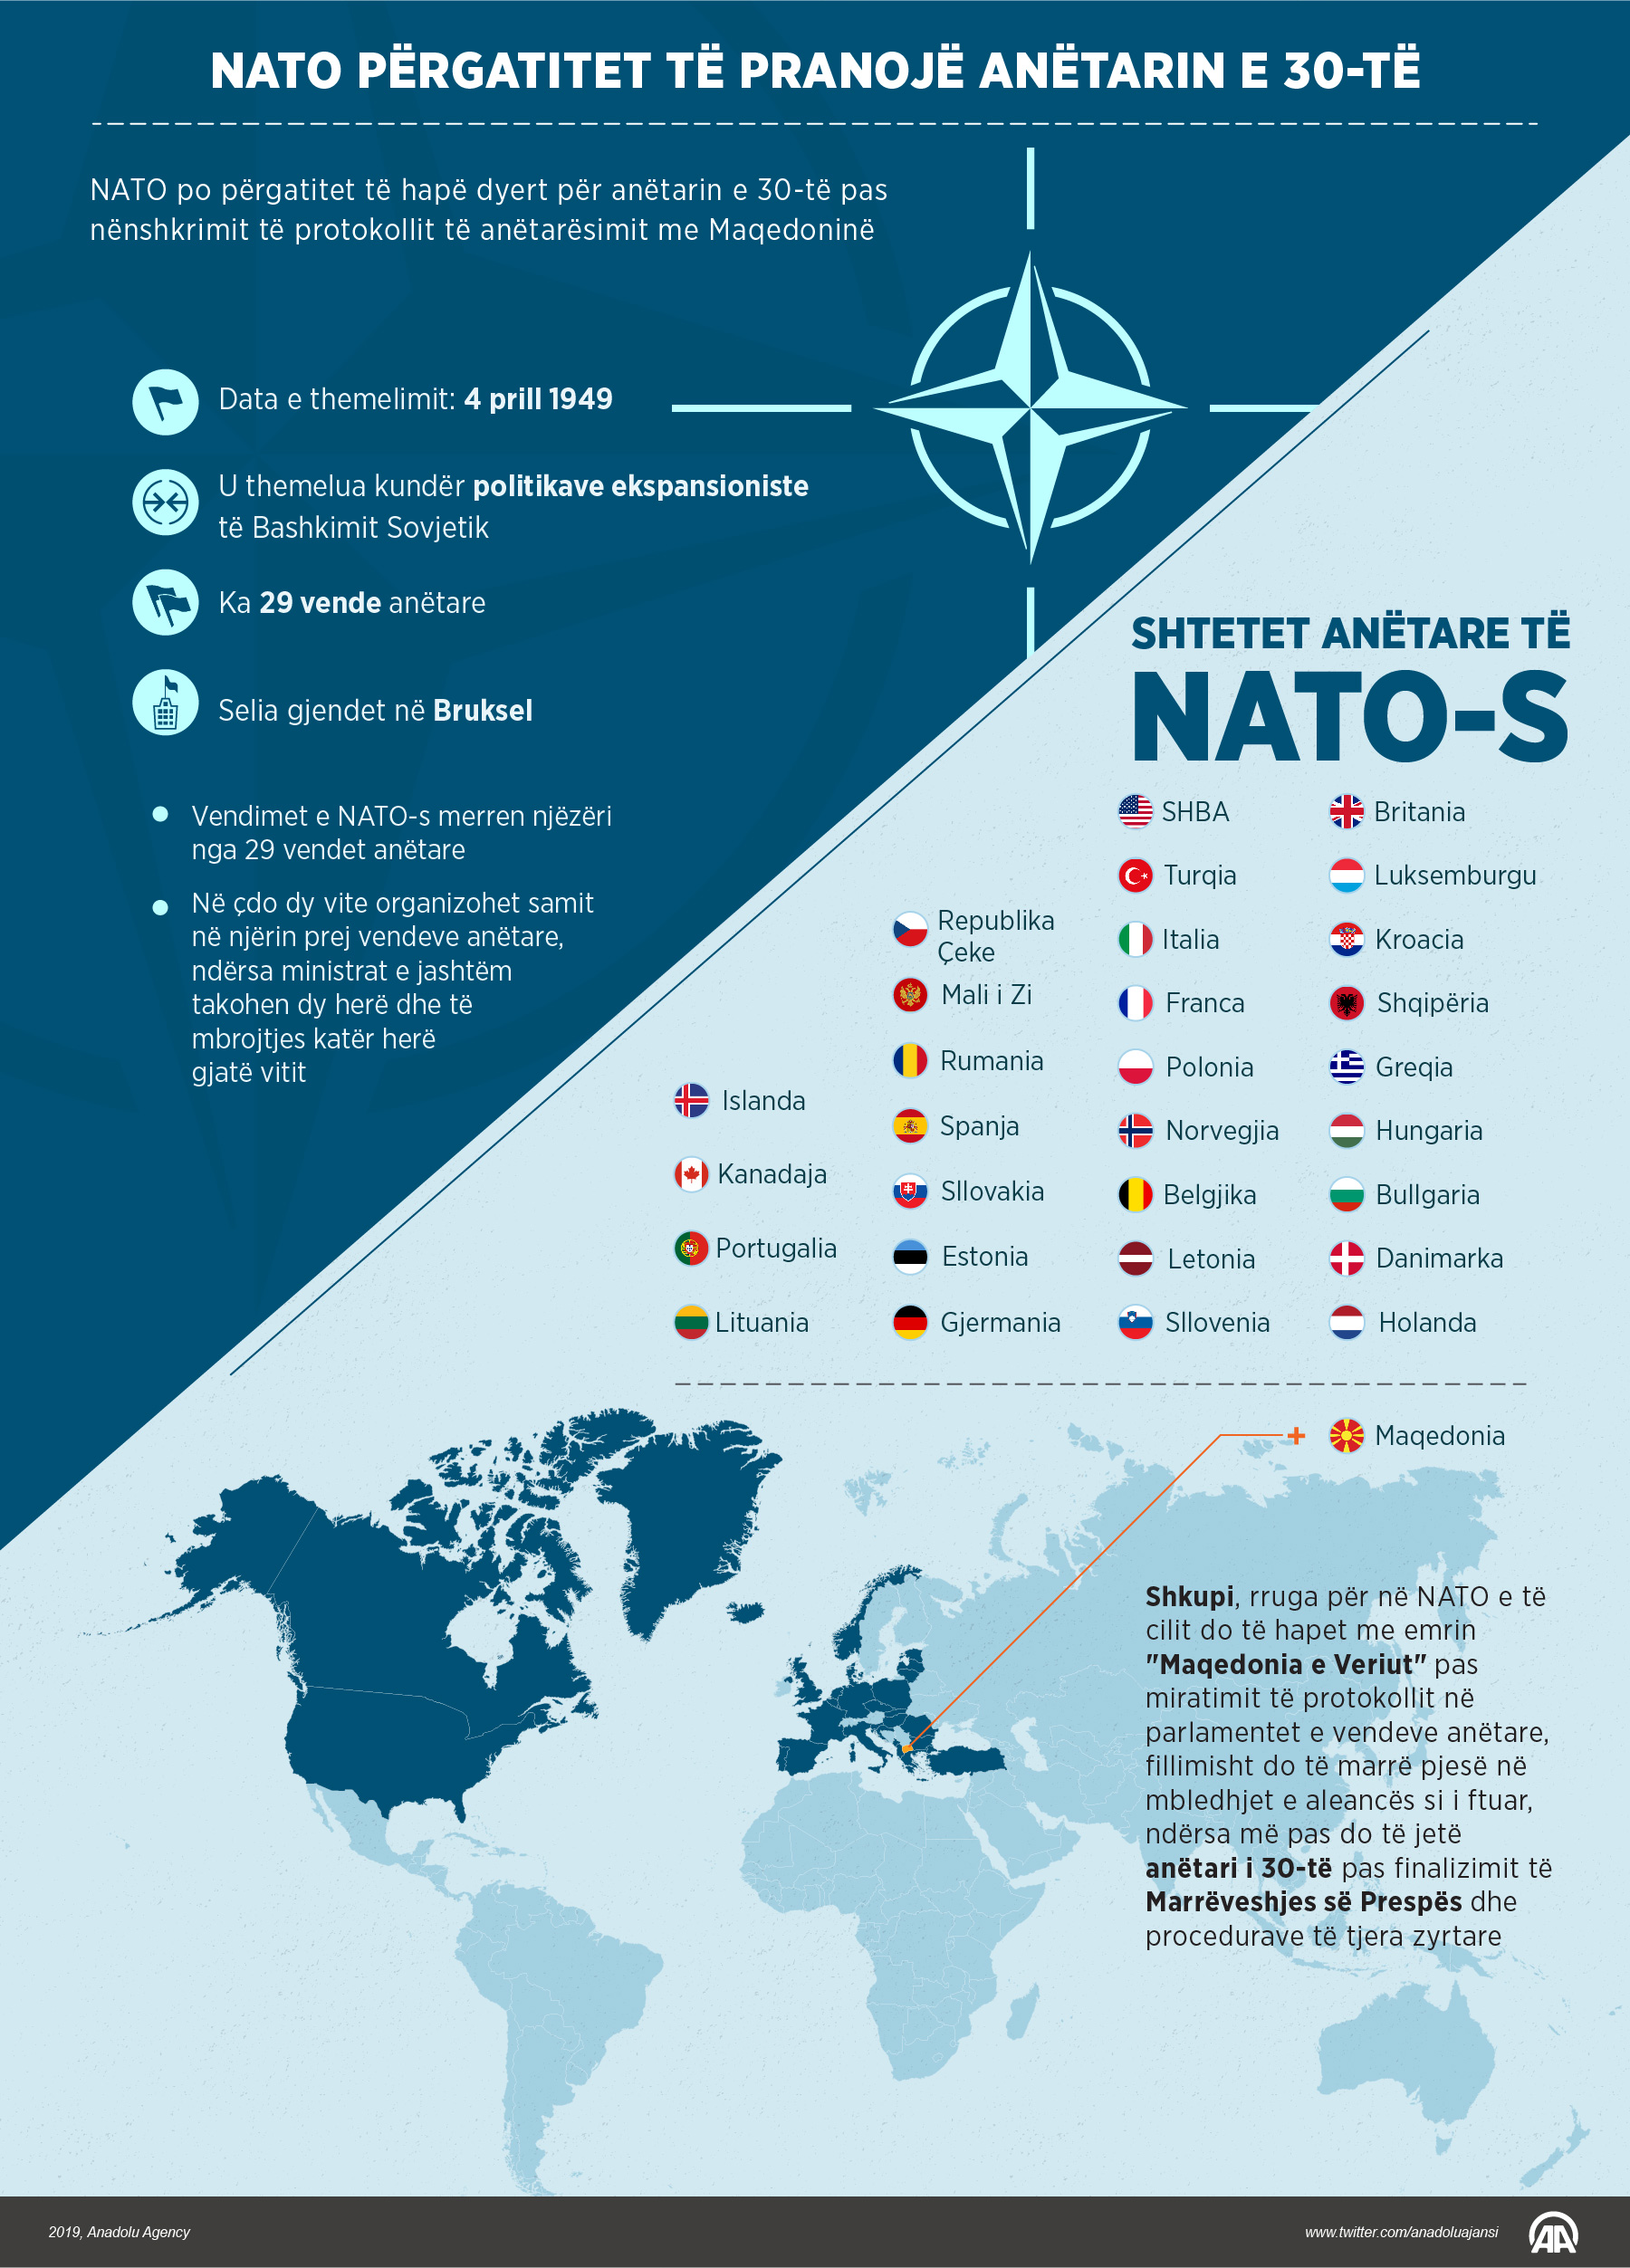 Жители нато. Какие страны входят в Североатлантический Альянс НАТО. Состав организации Североатлантического договора НАТО. НАТО страны входящие в организацию. Государства блока НАТО.